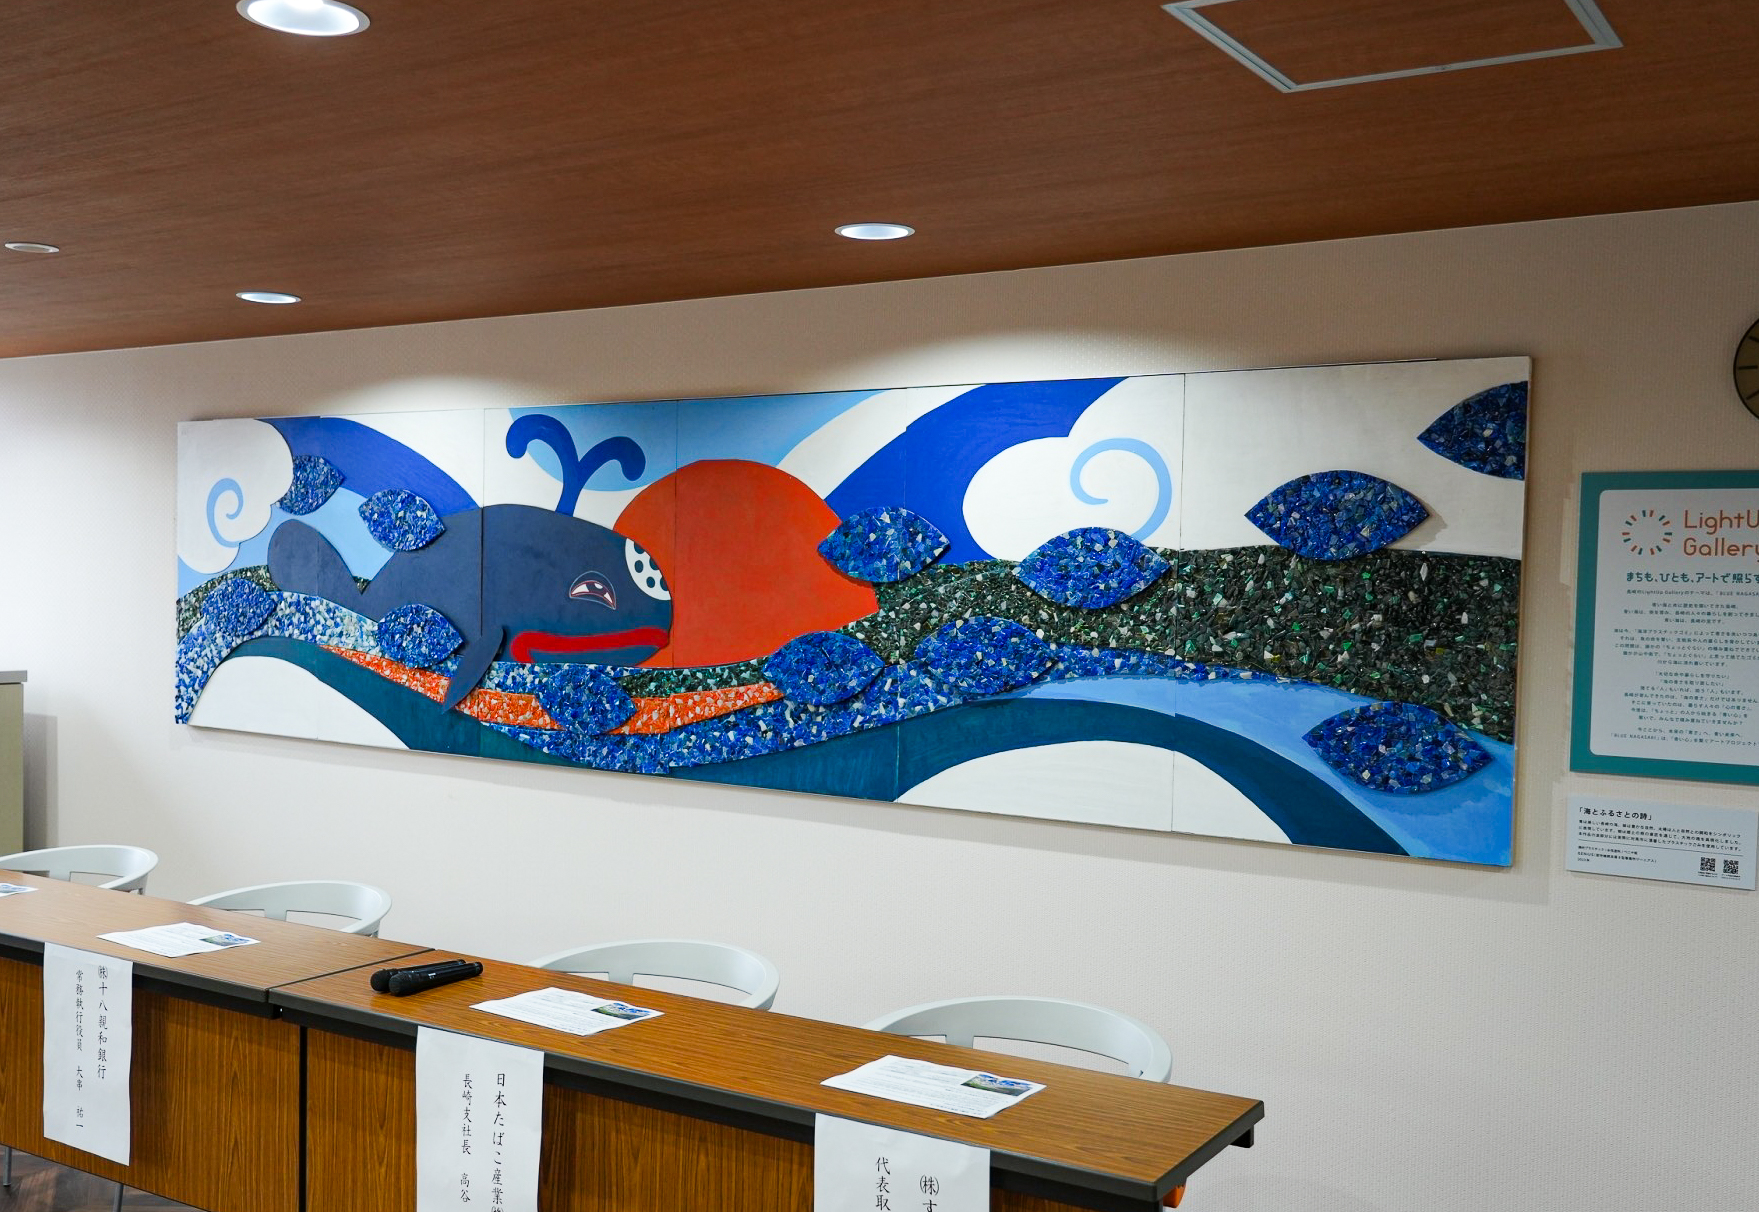 JT・HI合同会社・十八親和銀行・株式会社すみなすによるアートプロジェクト「 LightUp Gallery in 長崎」がスタートしました！